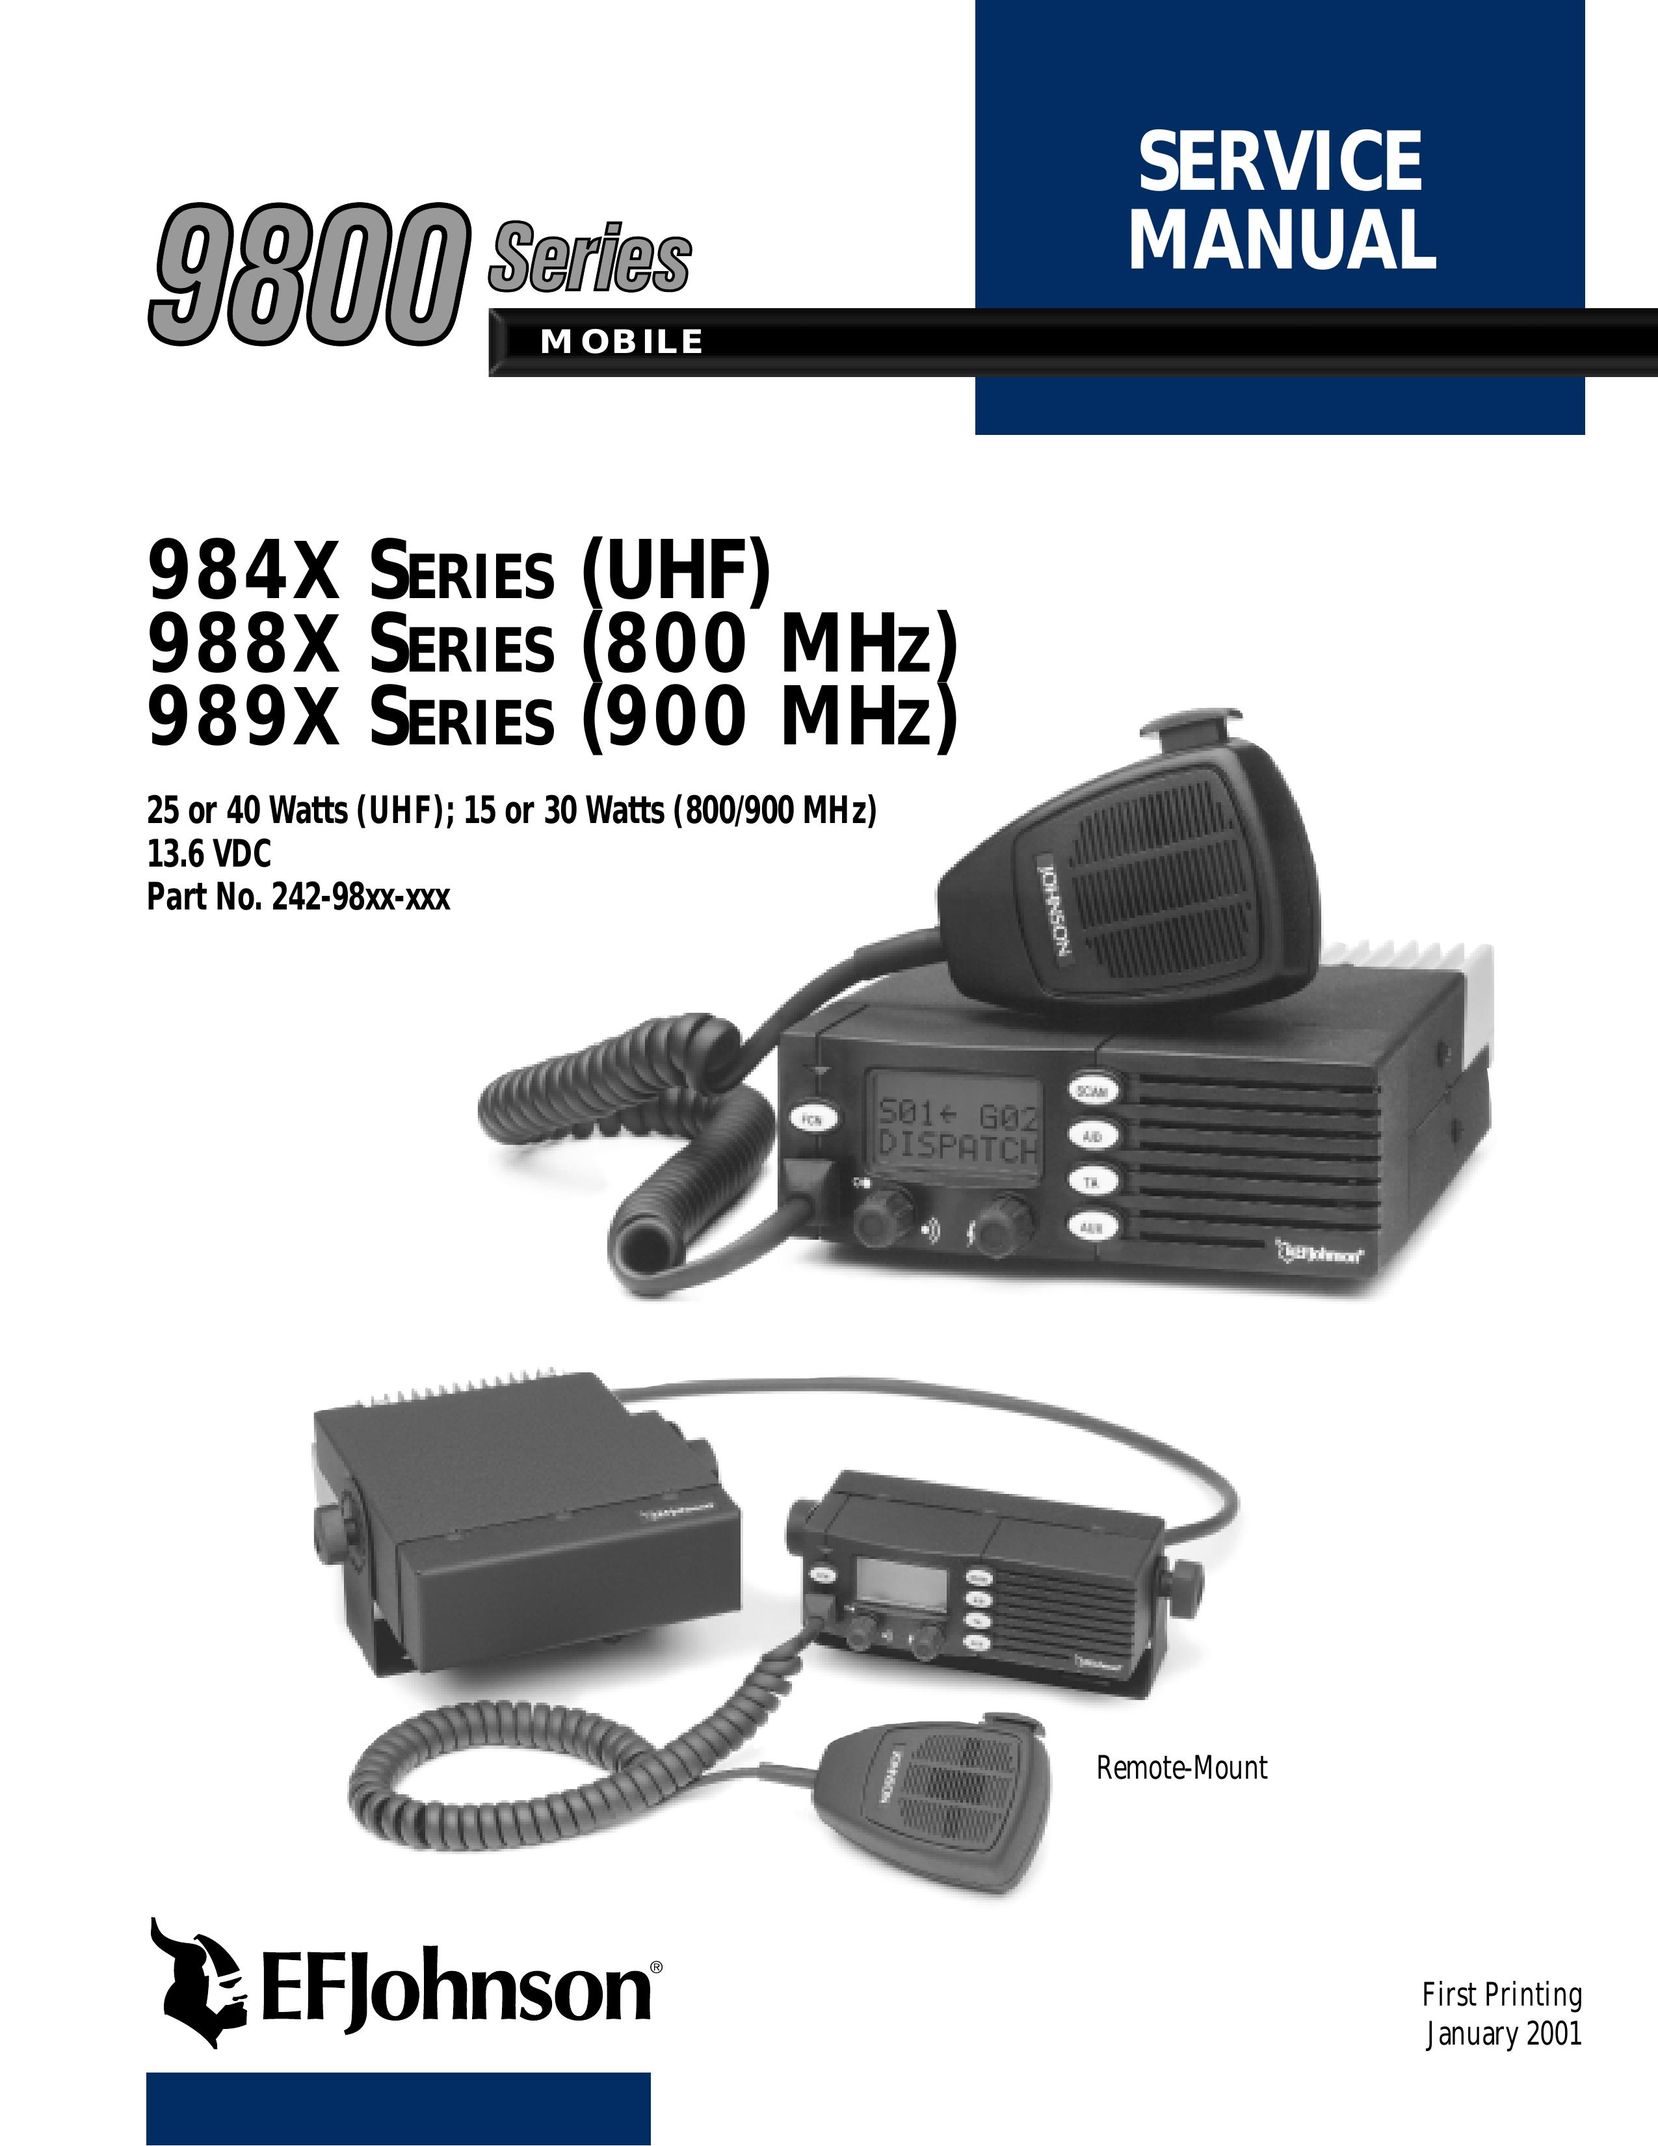 EFJohnson 984X SERIES Two-Way Radio User Manual